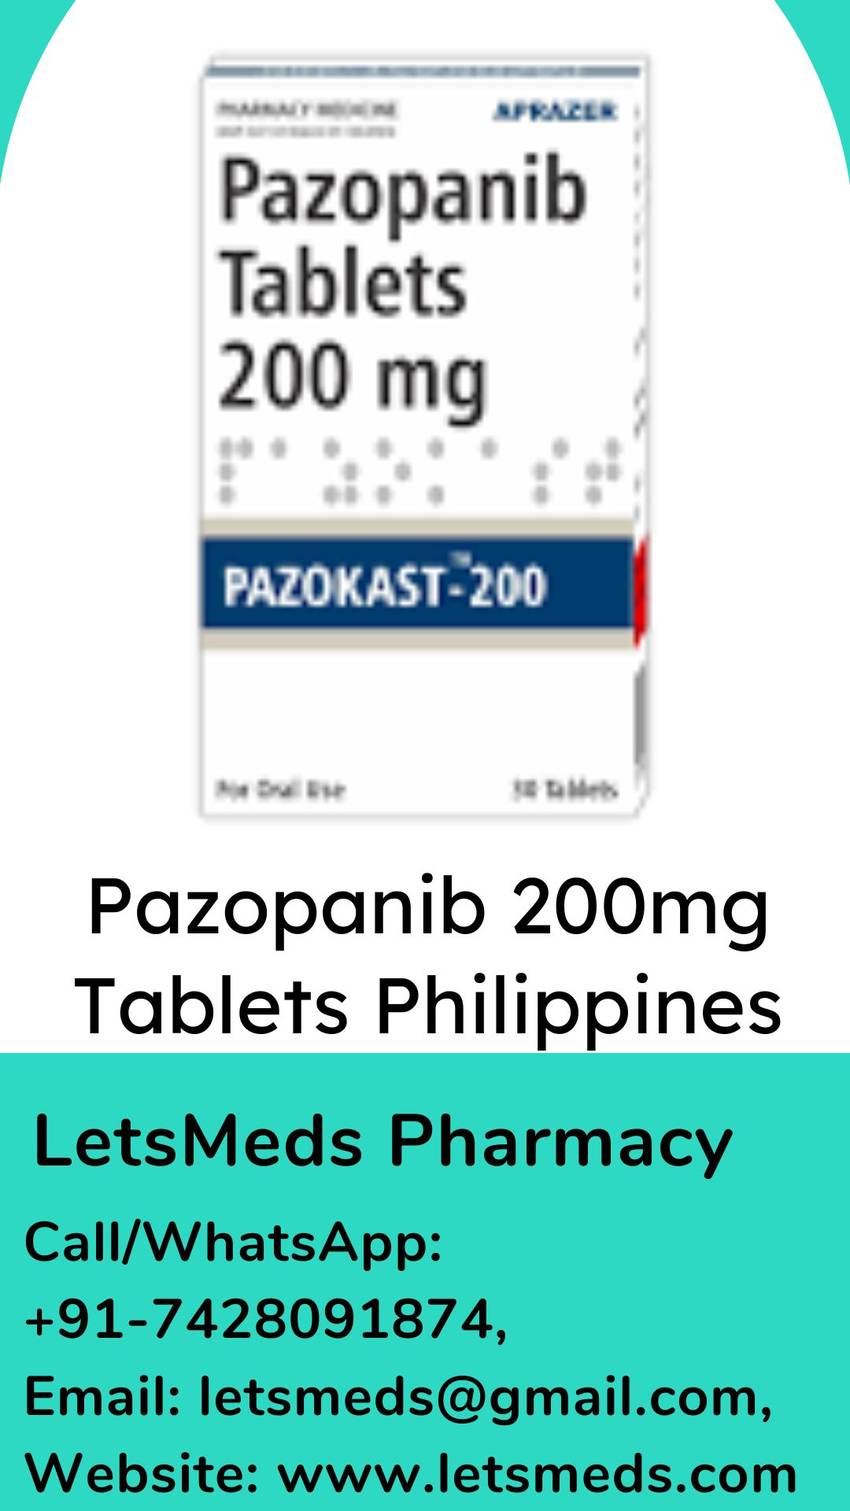 Pazopanib Tablets: A Revolutio...